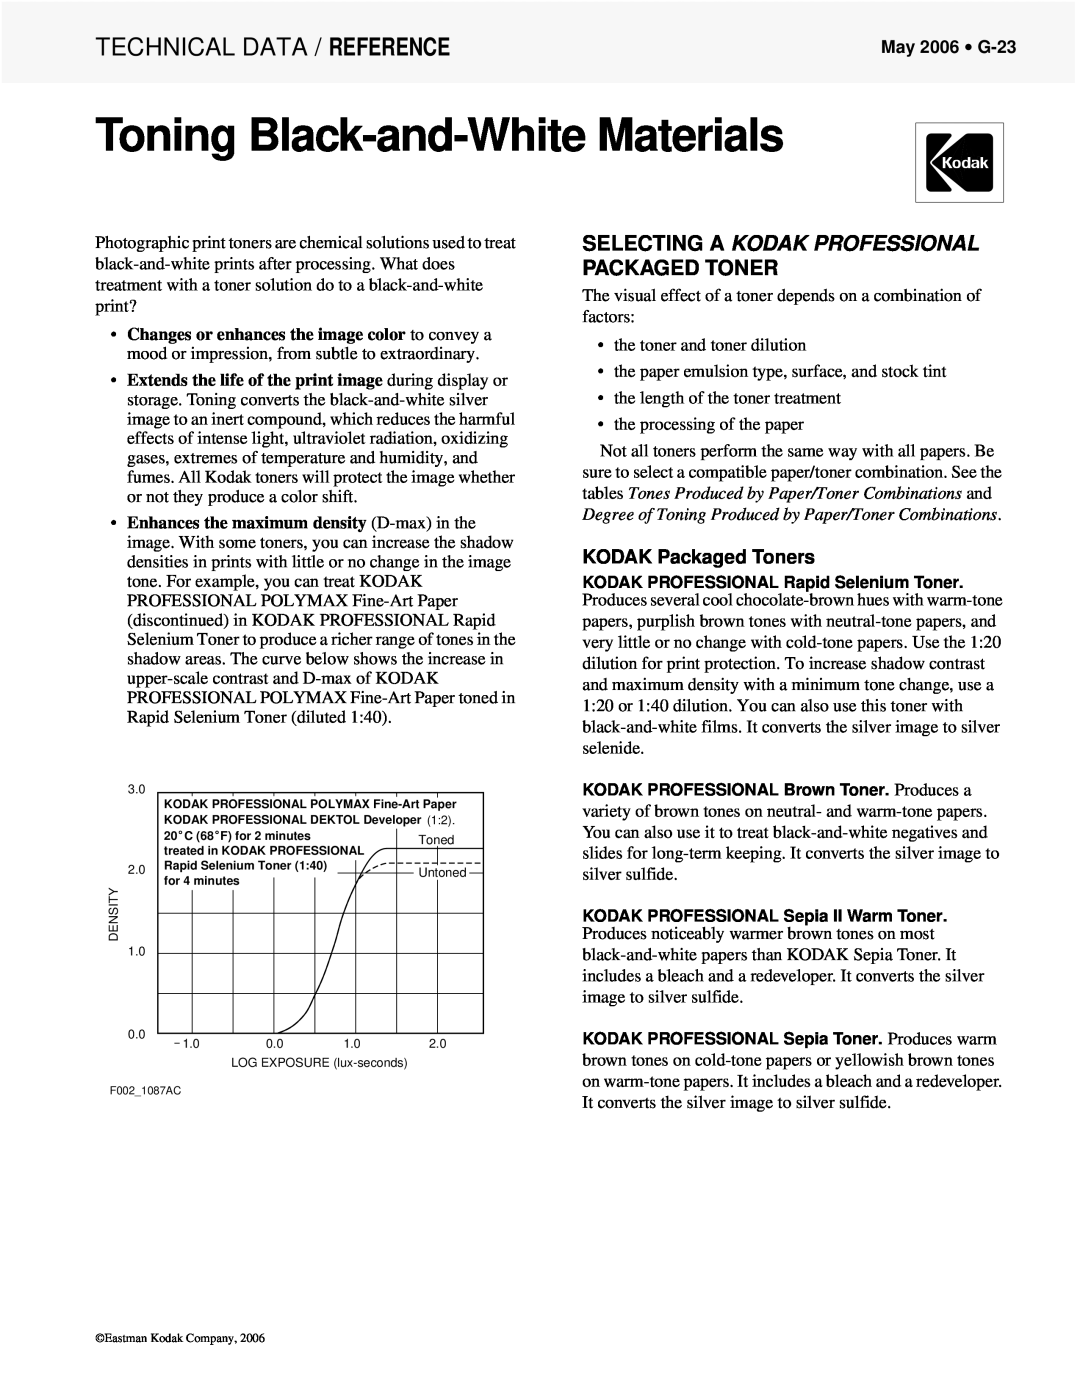 Kodak Printer Accessories manual Selecting A Kodak Professional Packaged Toner, KODAK Packaged Toners, May 2006 G-23 